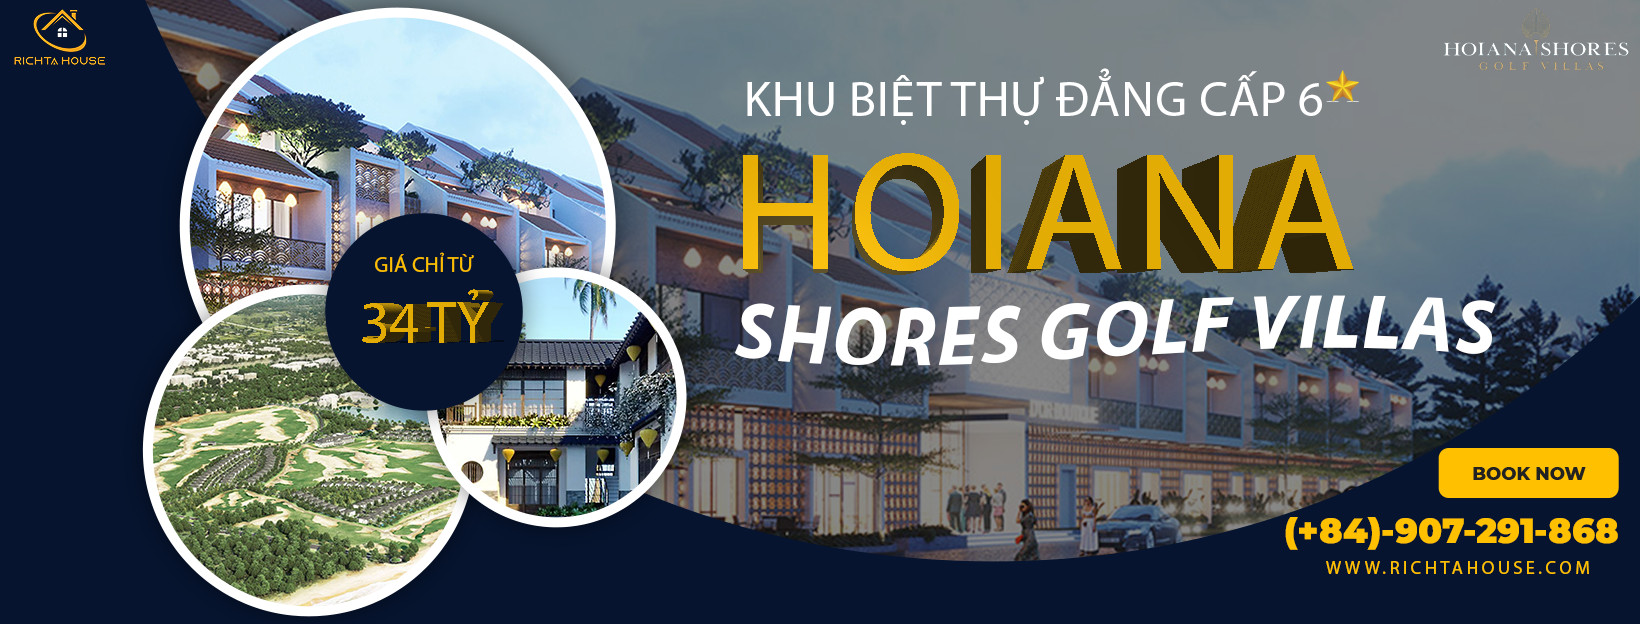 Banner hoiana Nam Shores